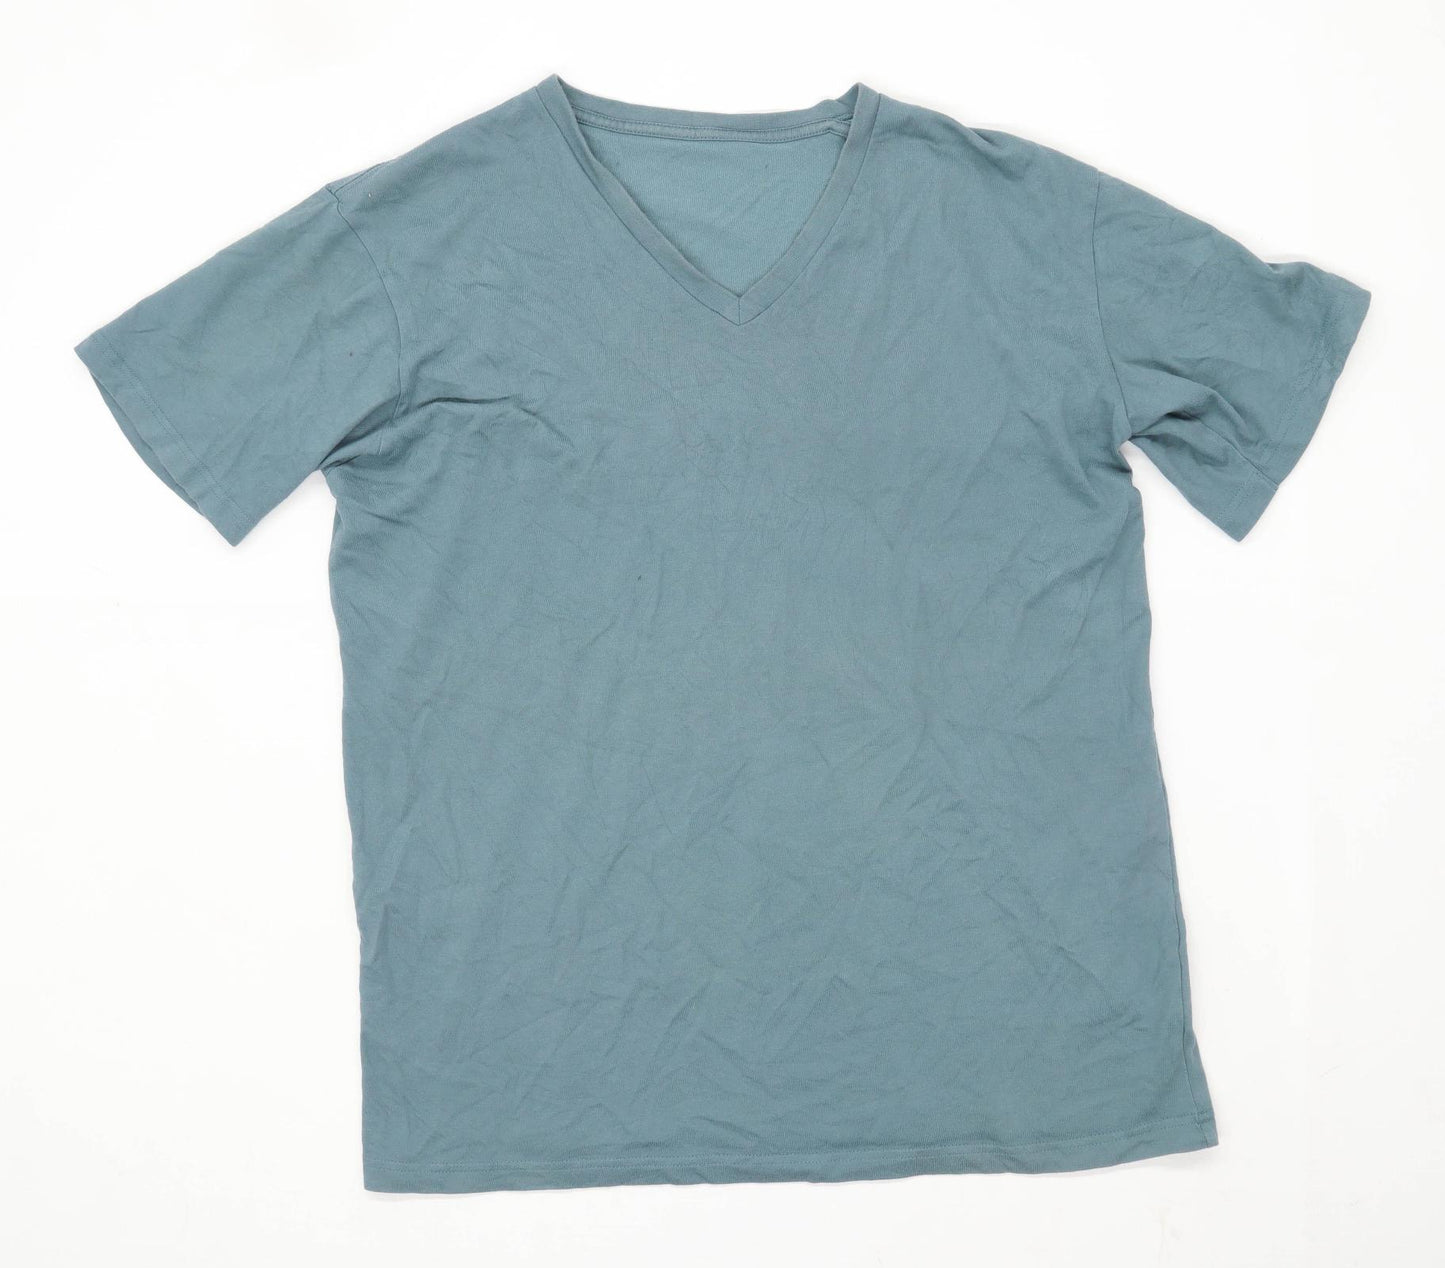 Uniqlo Mens Size L Cotton Blend Green T-Shirt